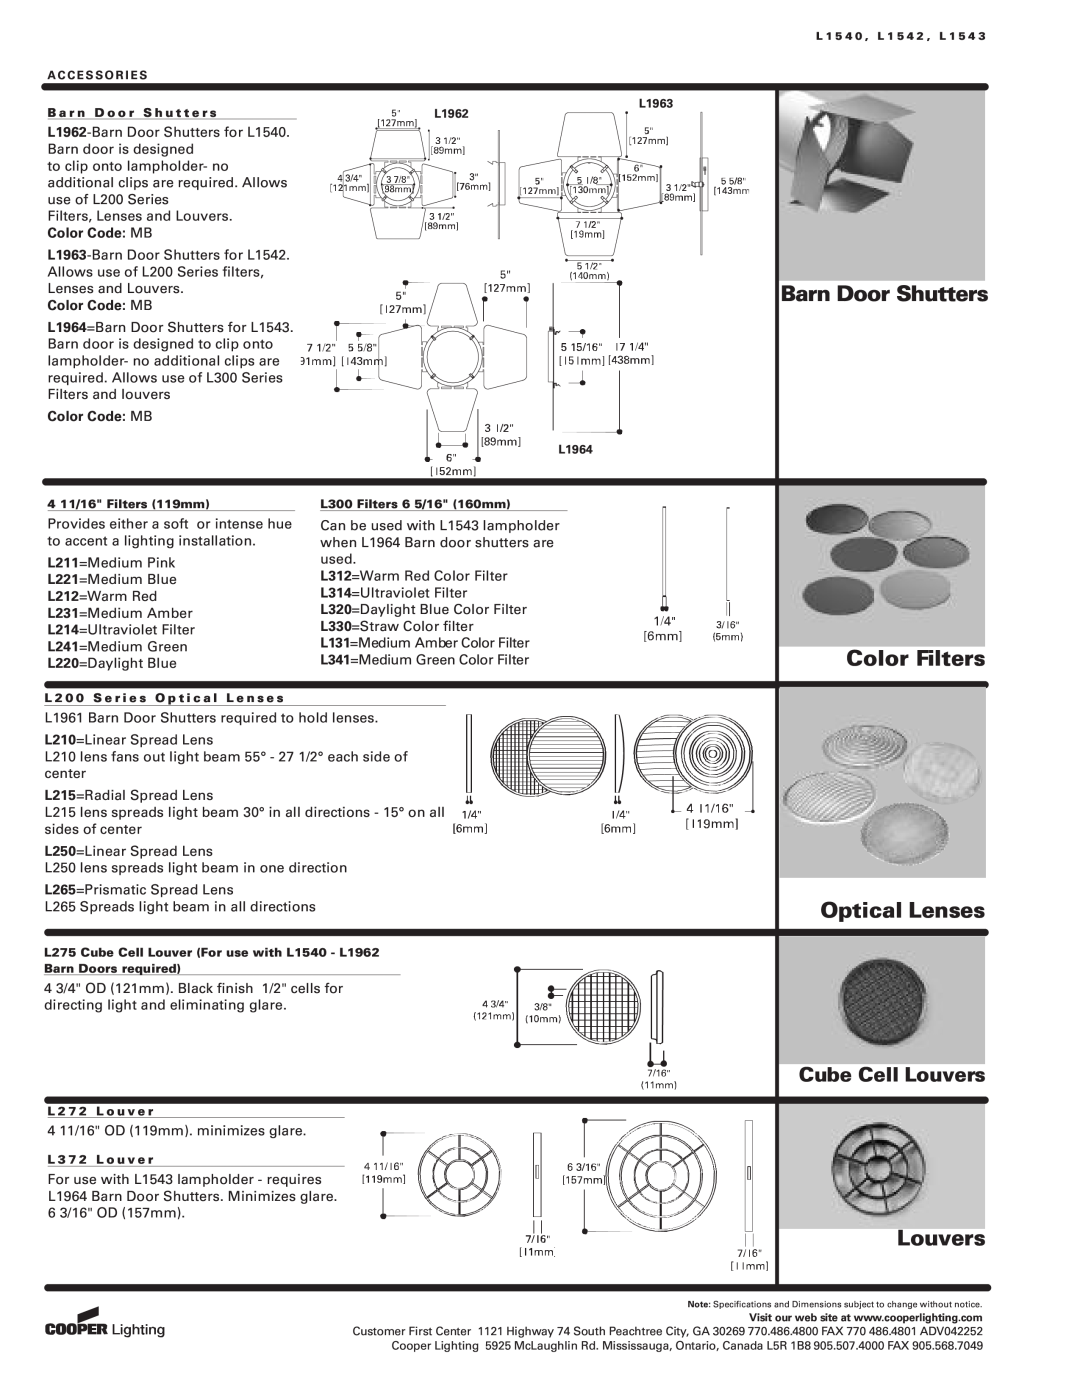 Cooper Lighting L1542, L1540, L1543 manual   ,  ,  ,    